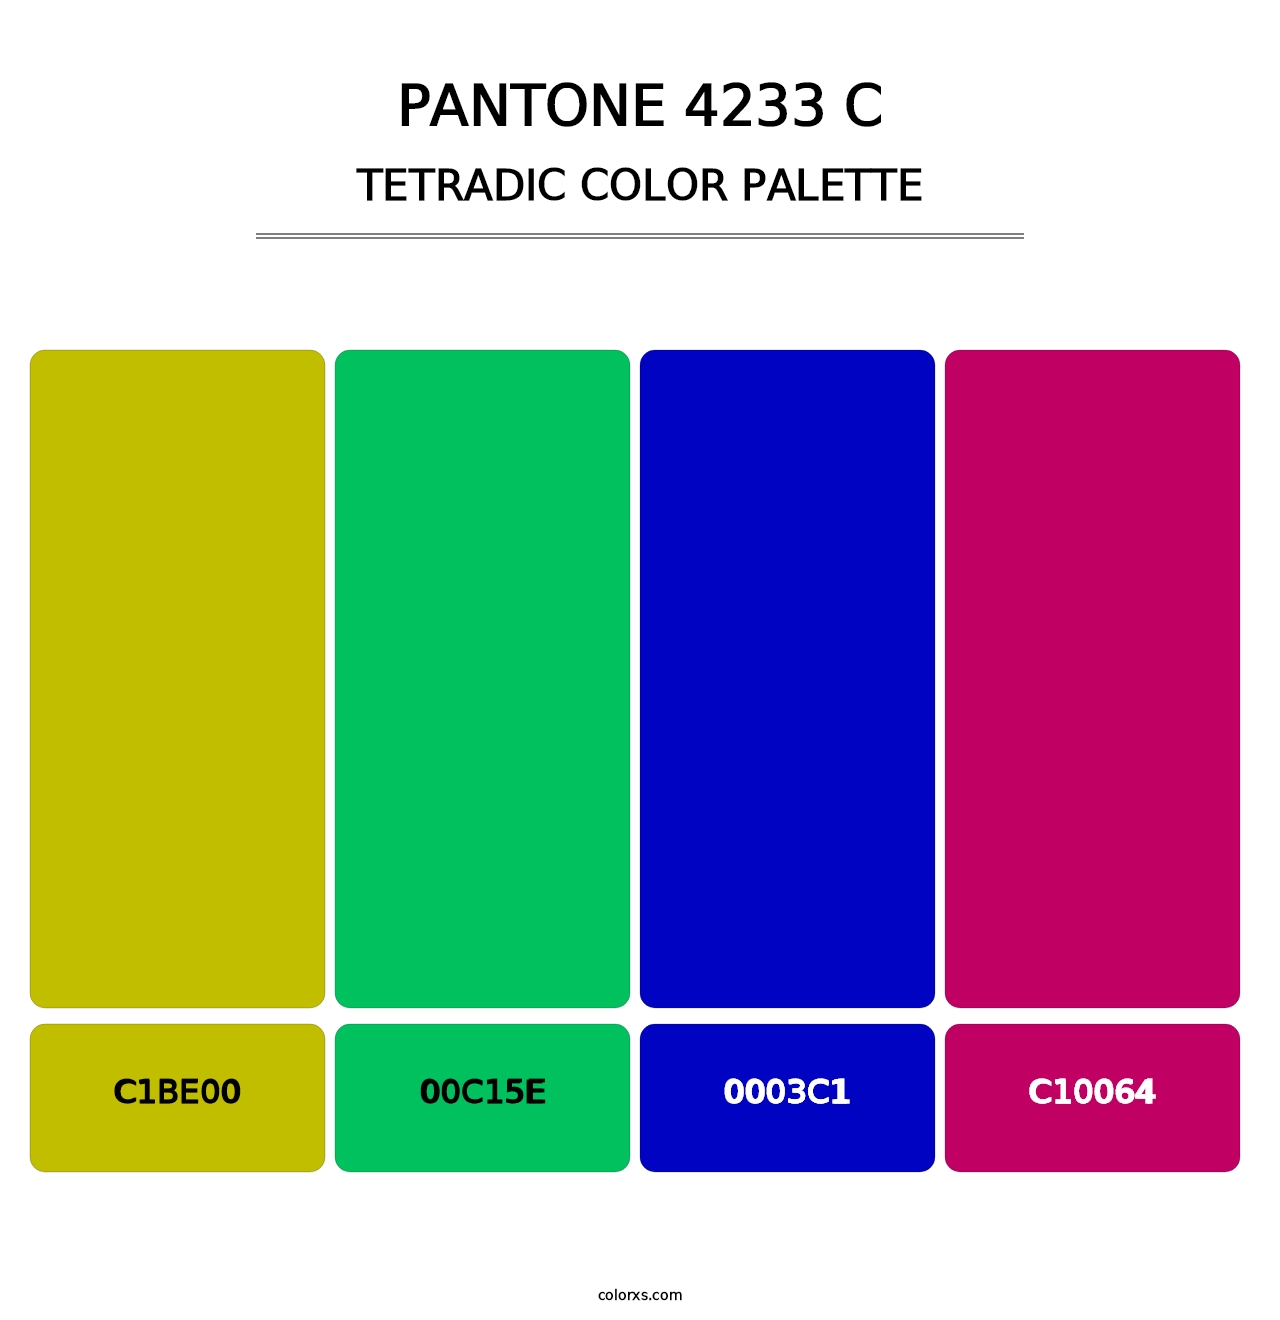 PANTONE 4233 C - Tetradic Color Palette